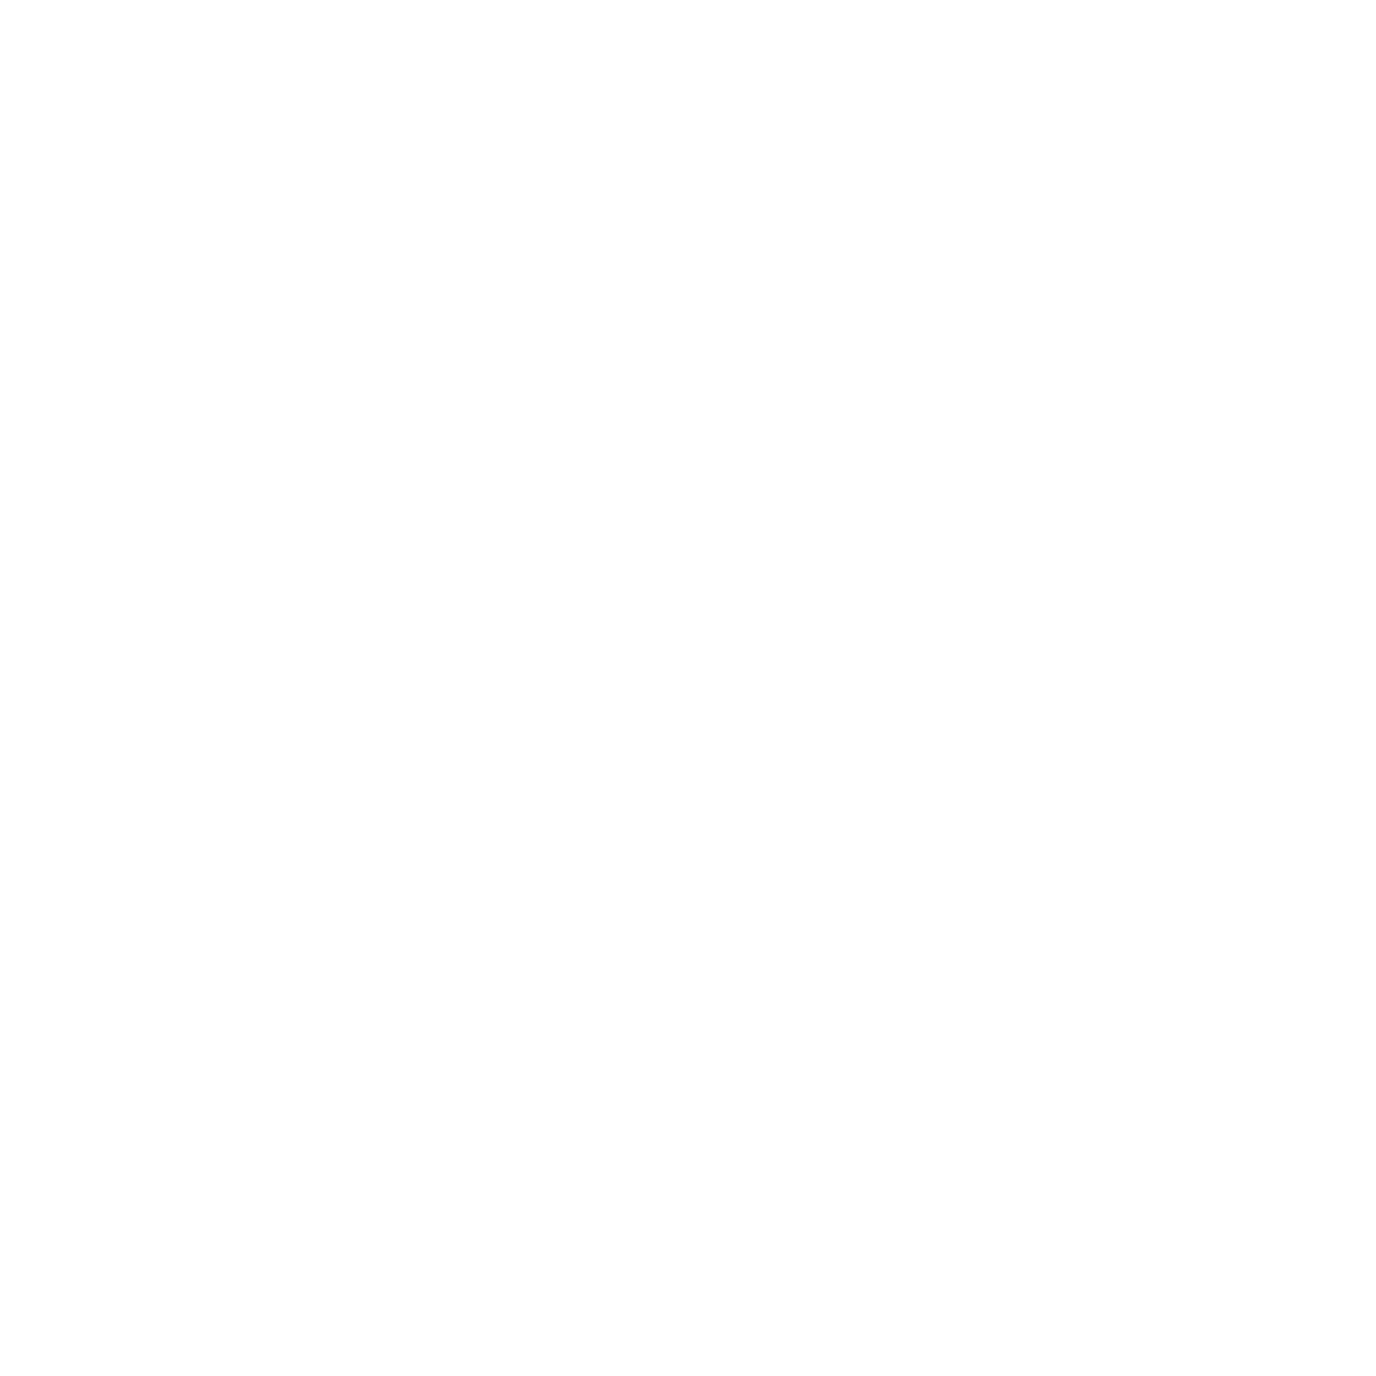 threads instagram logo vector png - PNGBUY